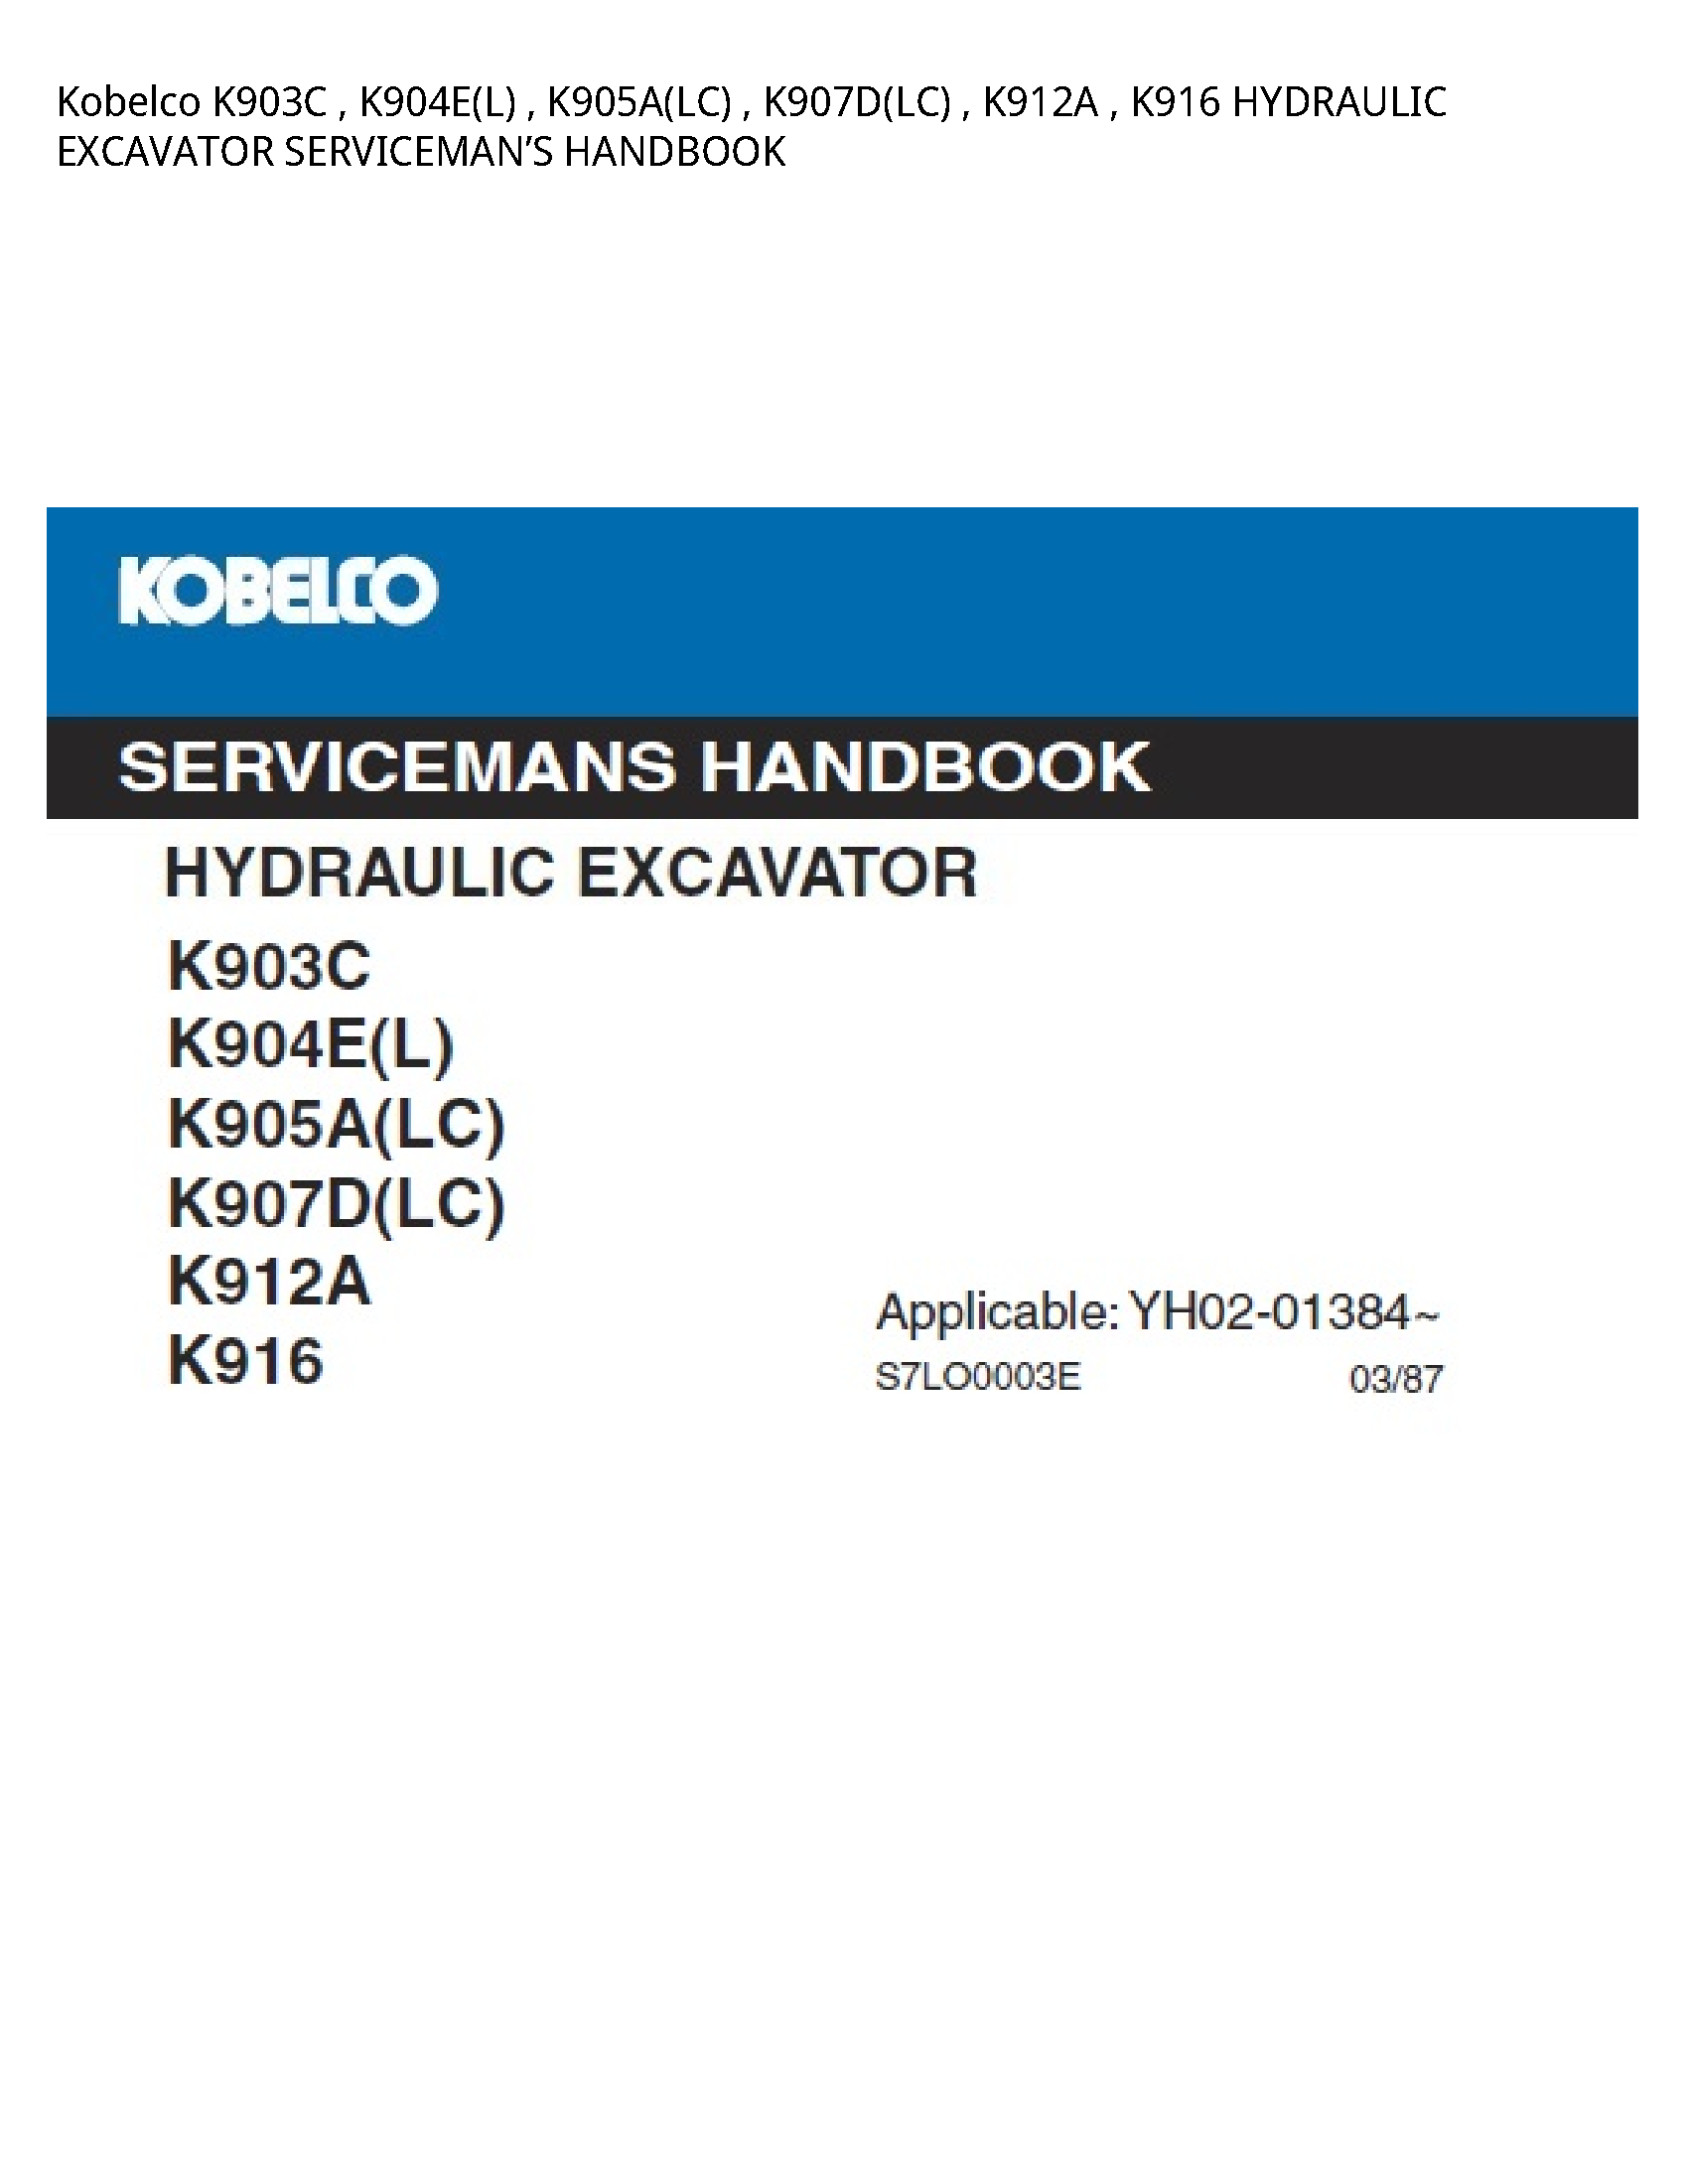 Kobelco K903C HYDRAULIC EXCAVATOR SERVICEMAN’S HANDBOOK manual